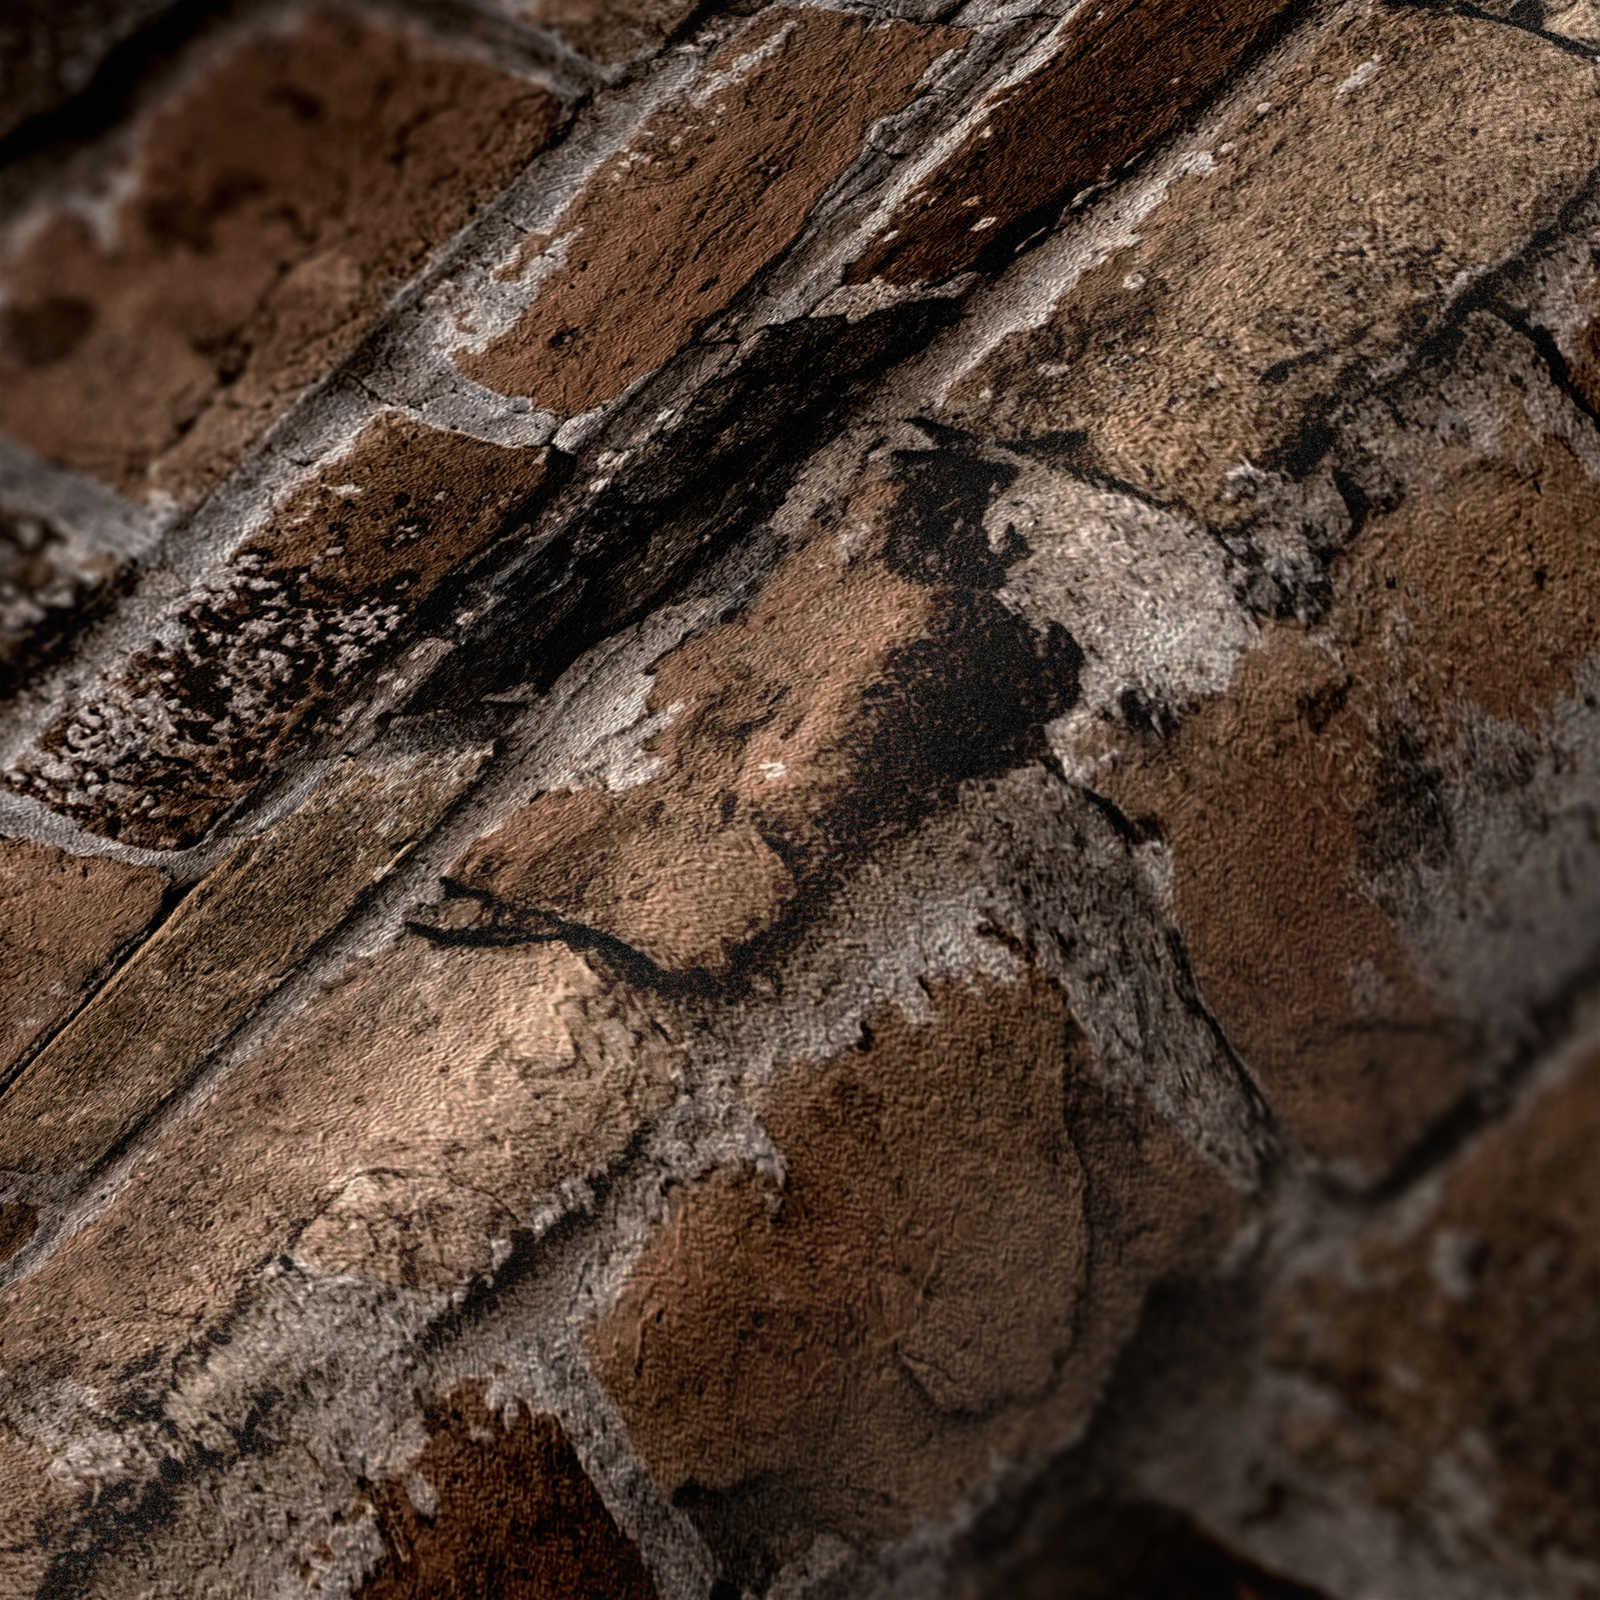             Stone-look non-woven wallpaper with brick design - brown
        